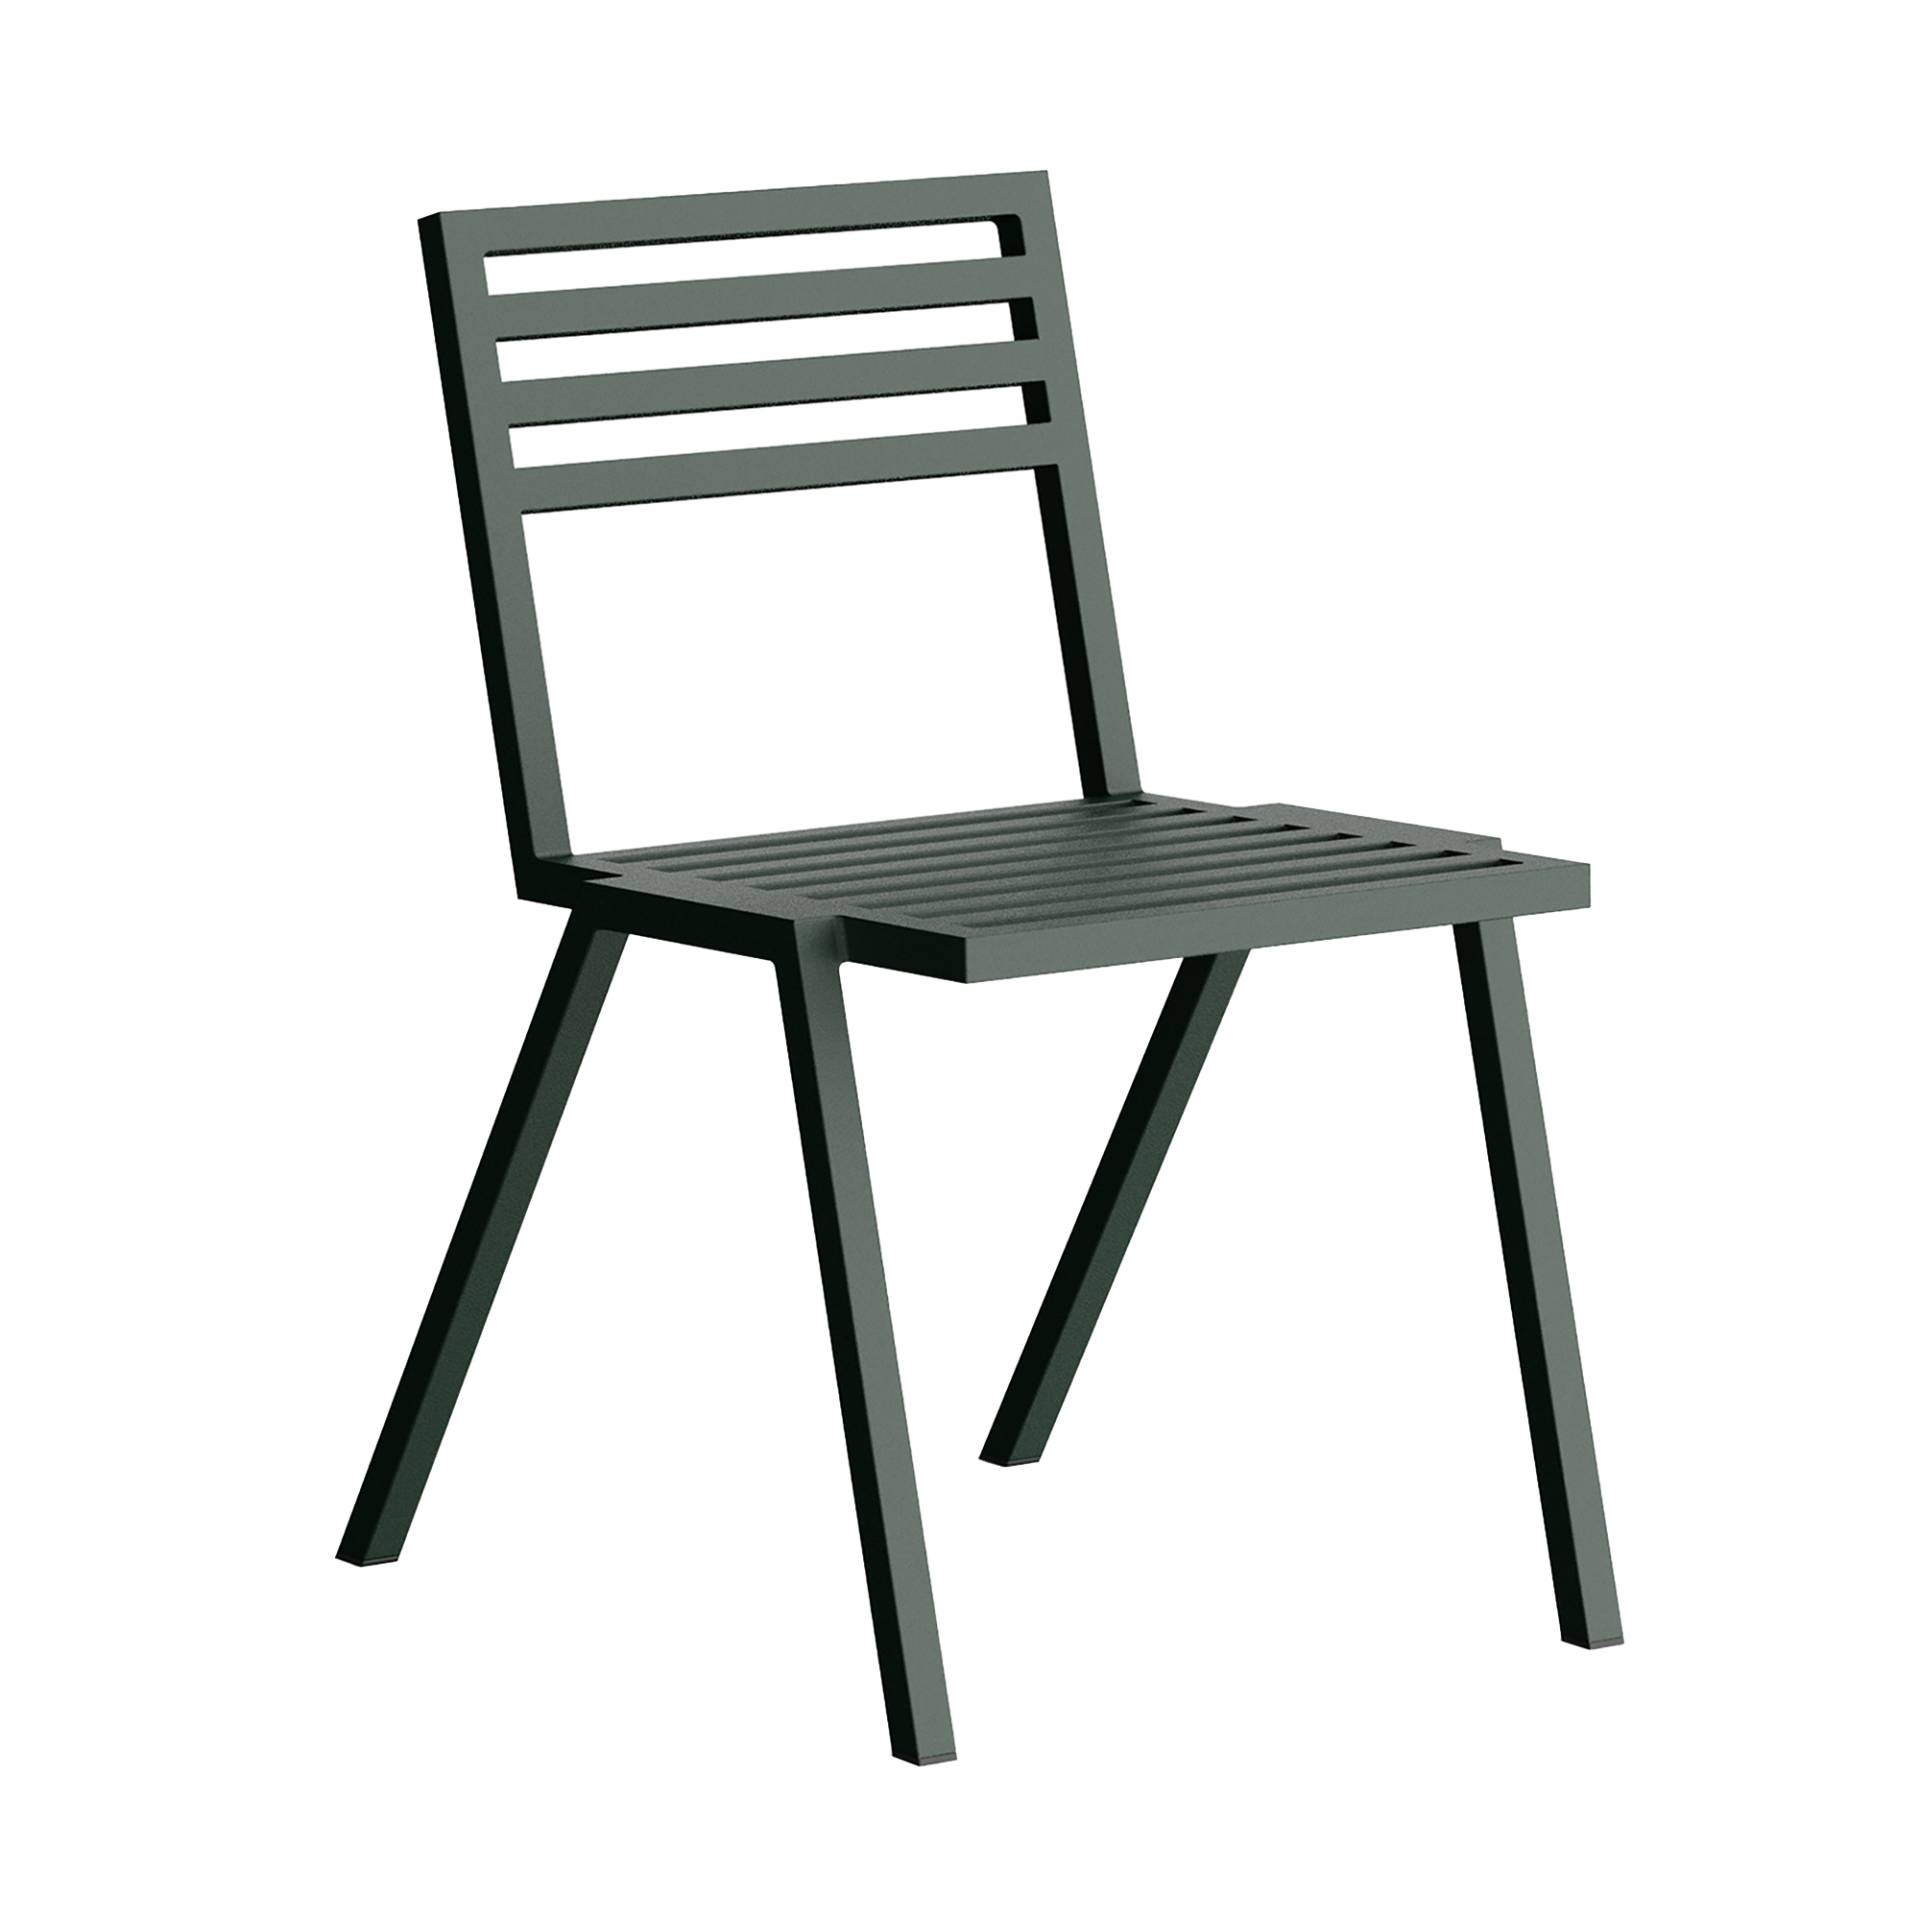 Nine - 19 Outdoors Stuhl stapelbar - grün RAL 200 20 10/pulverbeschichtet/BxHxT 48,5x79,5x60cm/geprüft gemäß BS EN 581 von Nine